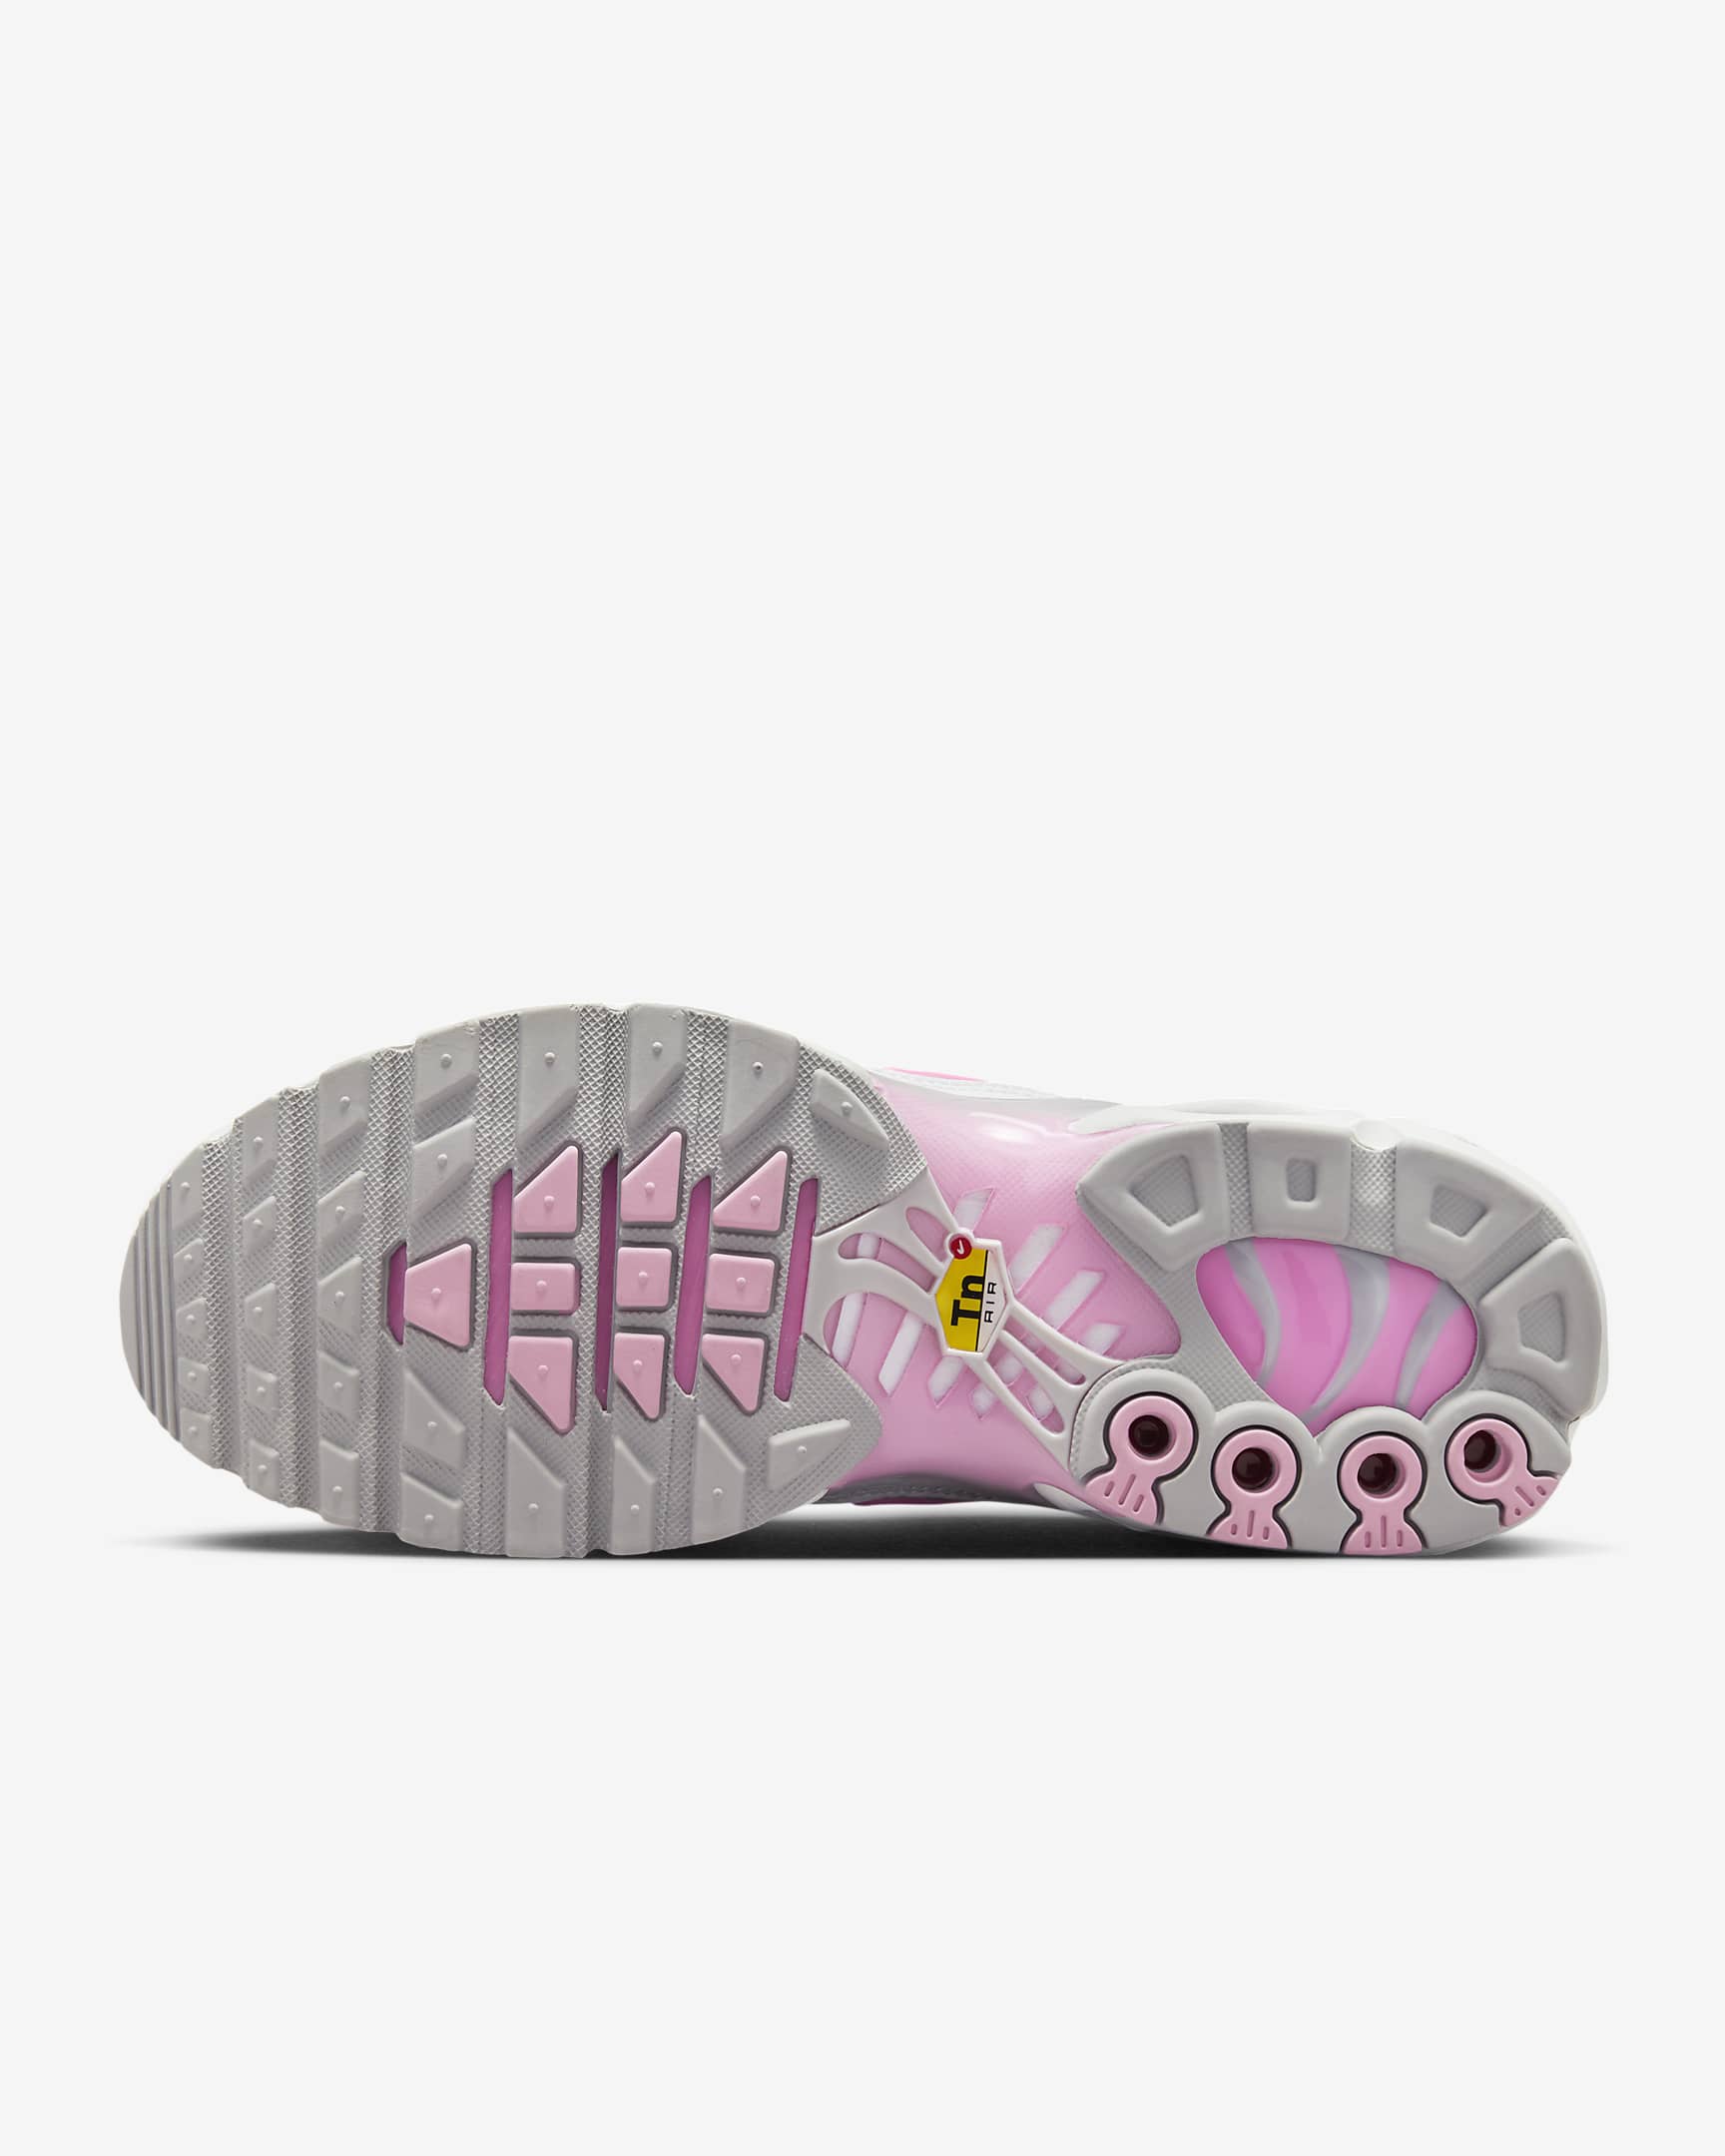 Nike Air Max Plus Women's Shoes - Summit White/Grey Fog/Metallic Silver/Pink Rise